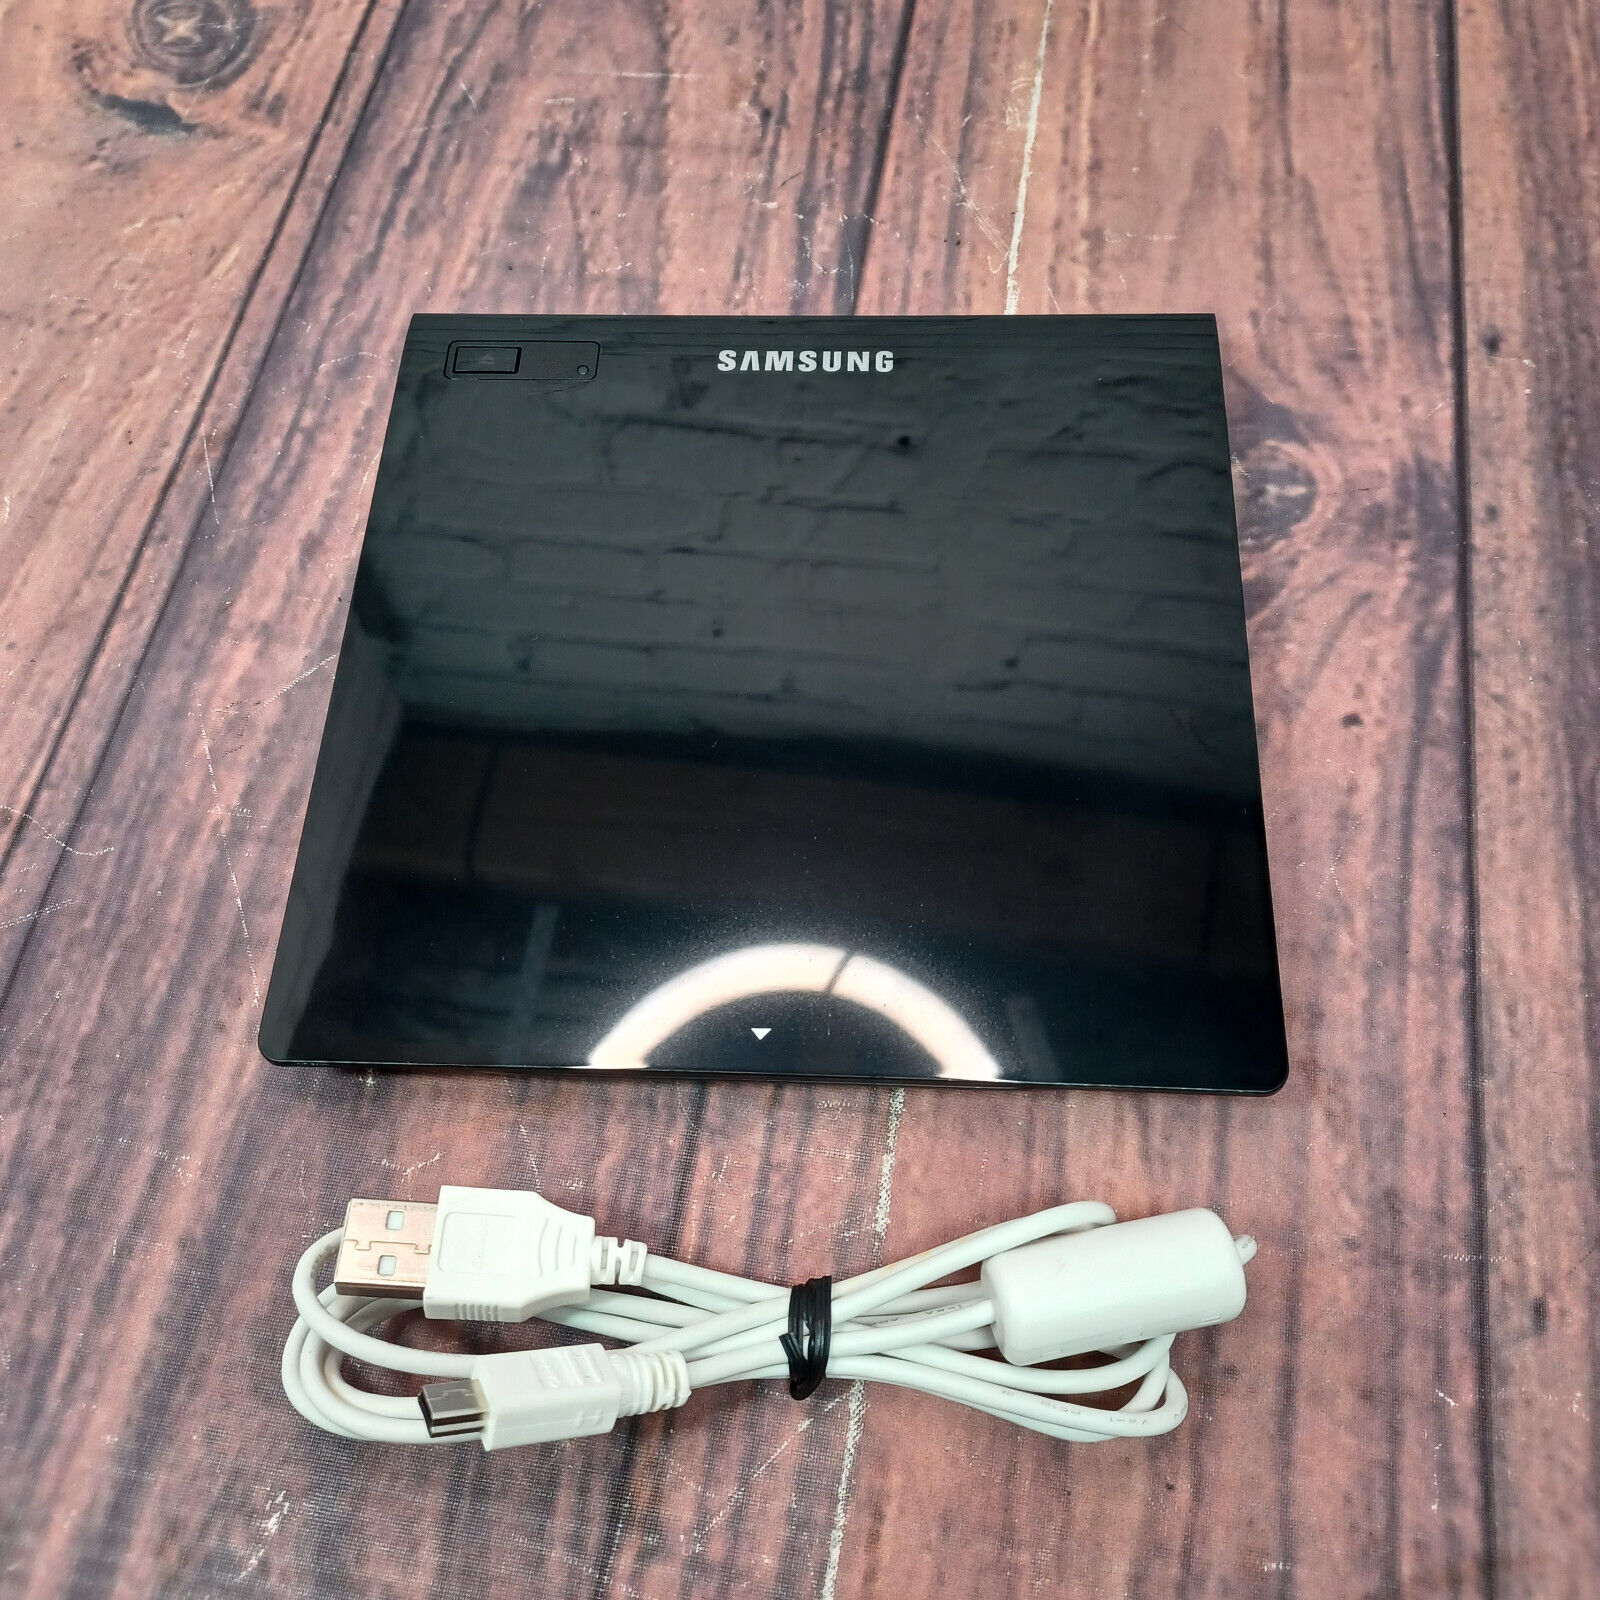 Samsung SE-208 Portable USB-Powered DVD Writer External Drive & Cord VGC ~TESTED